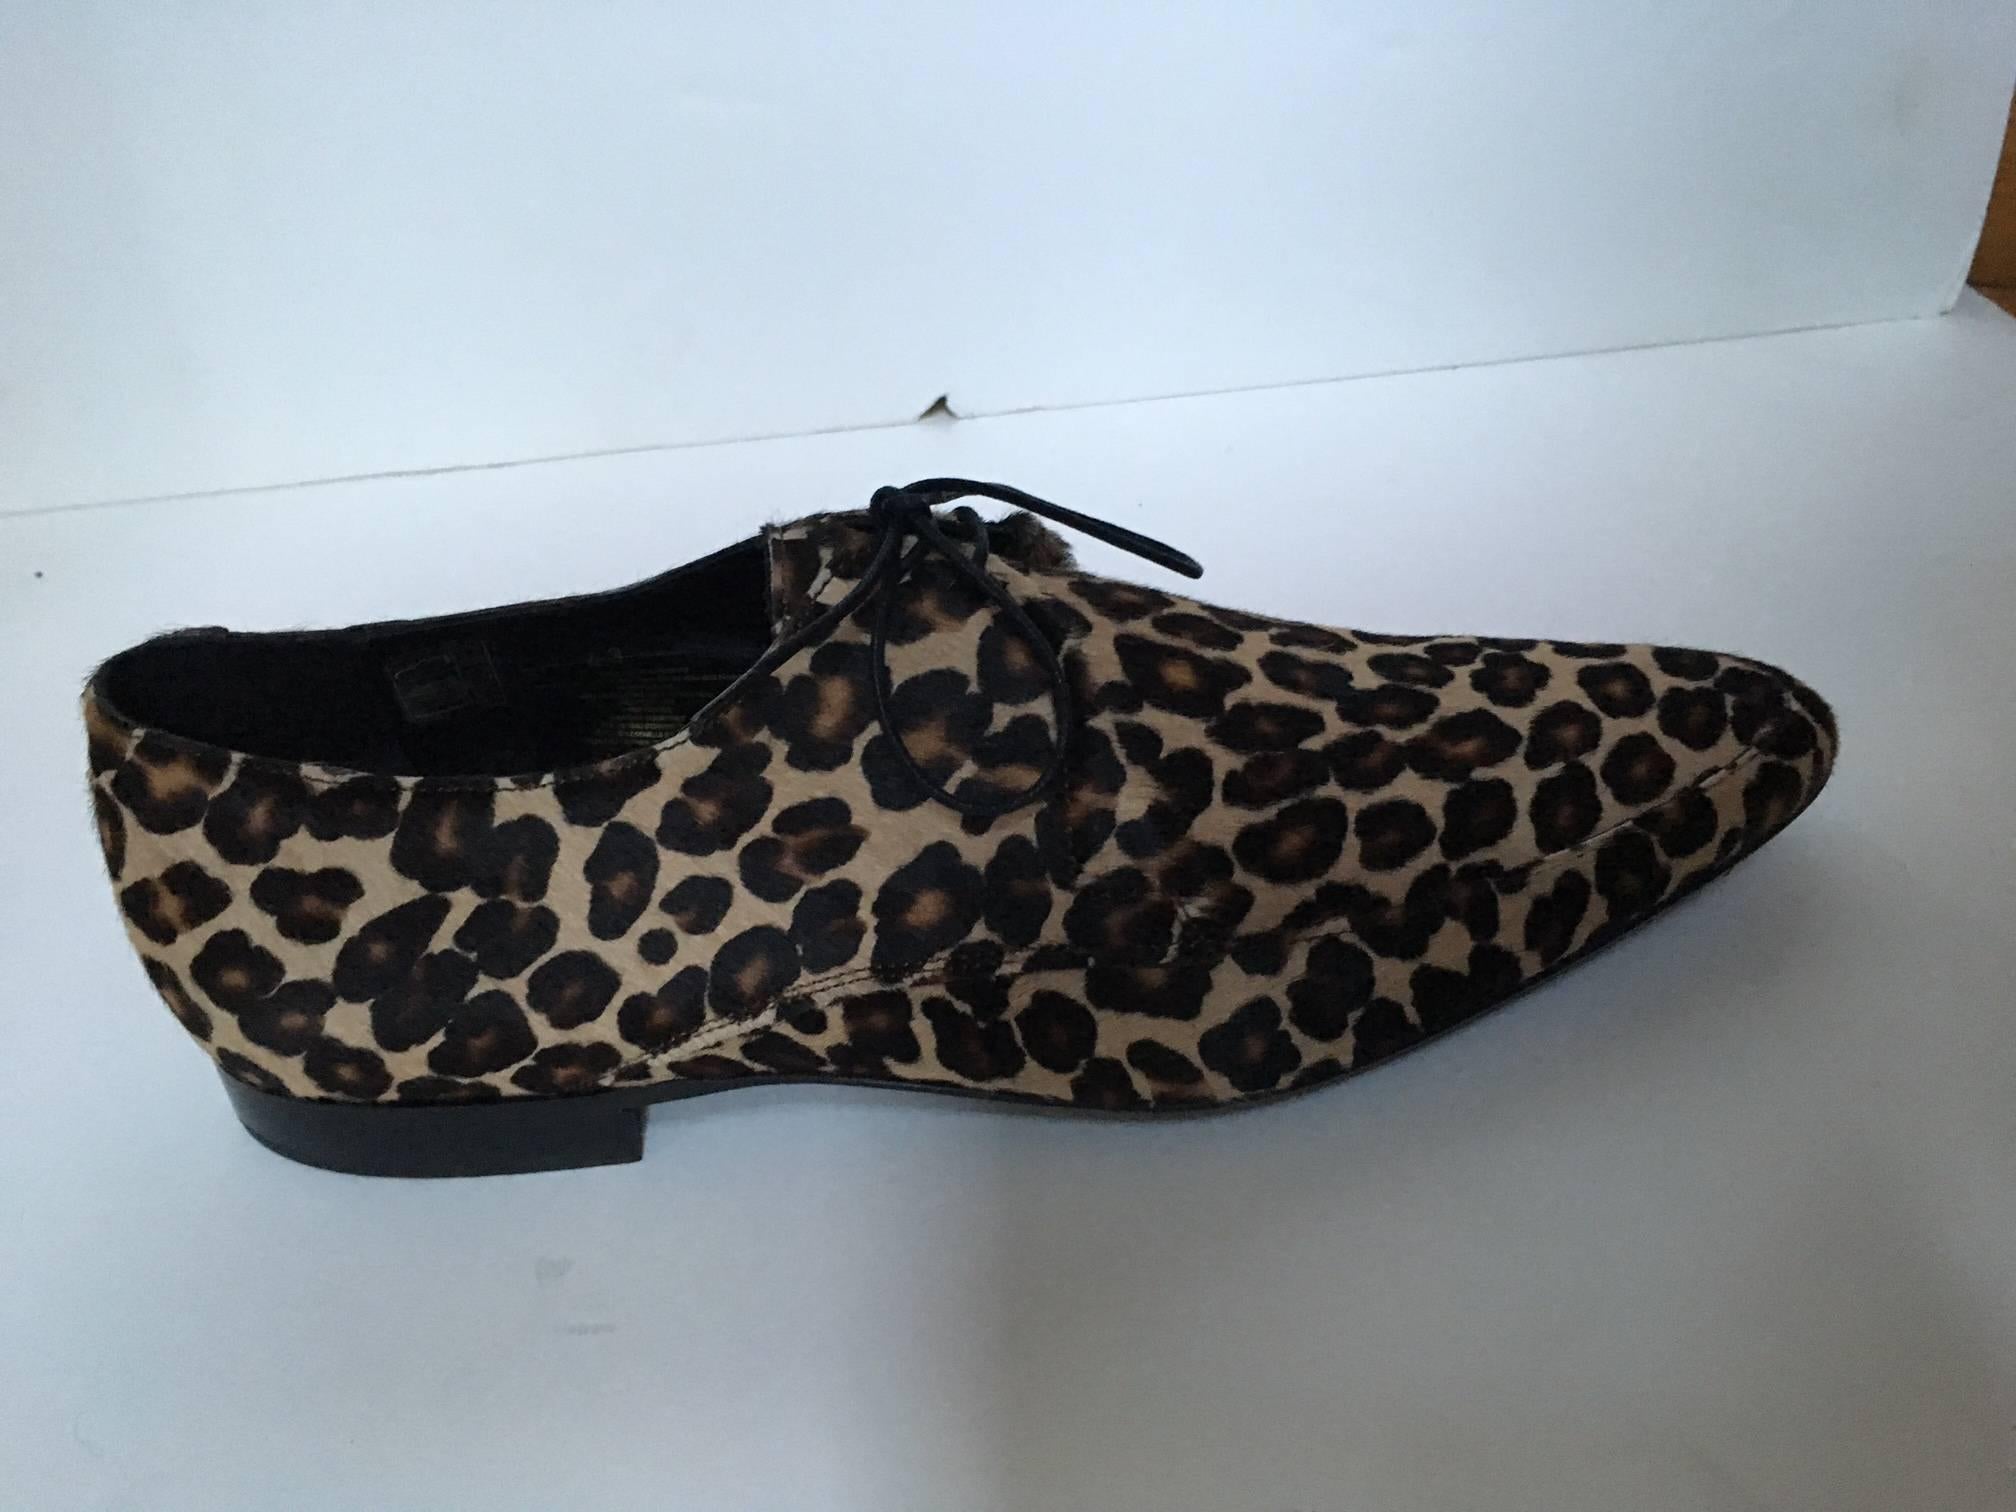 Black Burberry Prorsum Men's Leopard Print Calf Hair Derby Shoes new with box, unused